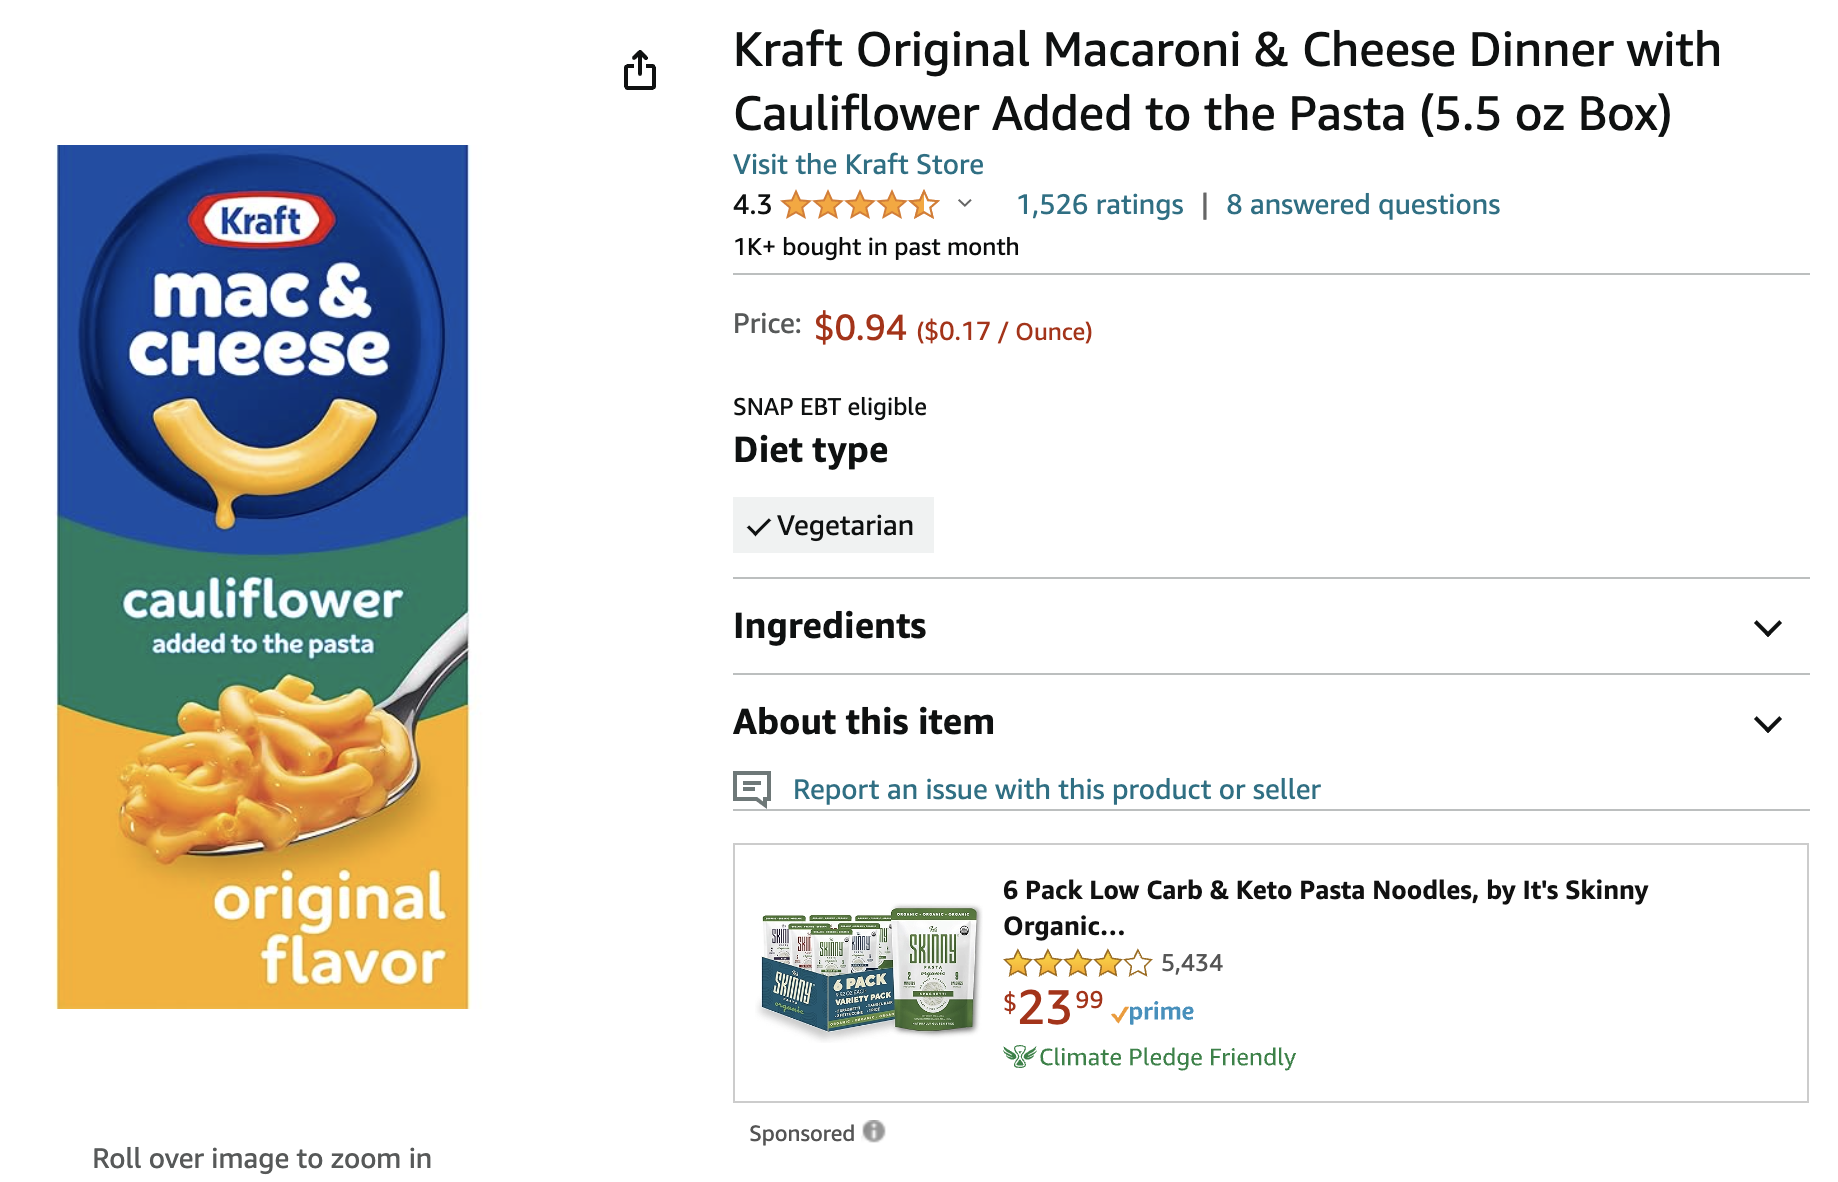 Kraft Original Macaroni & Cheese Dinner with Cauliflower Added to the Pasta (5.5 oz Box) $0.94